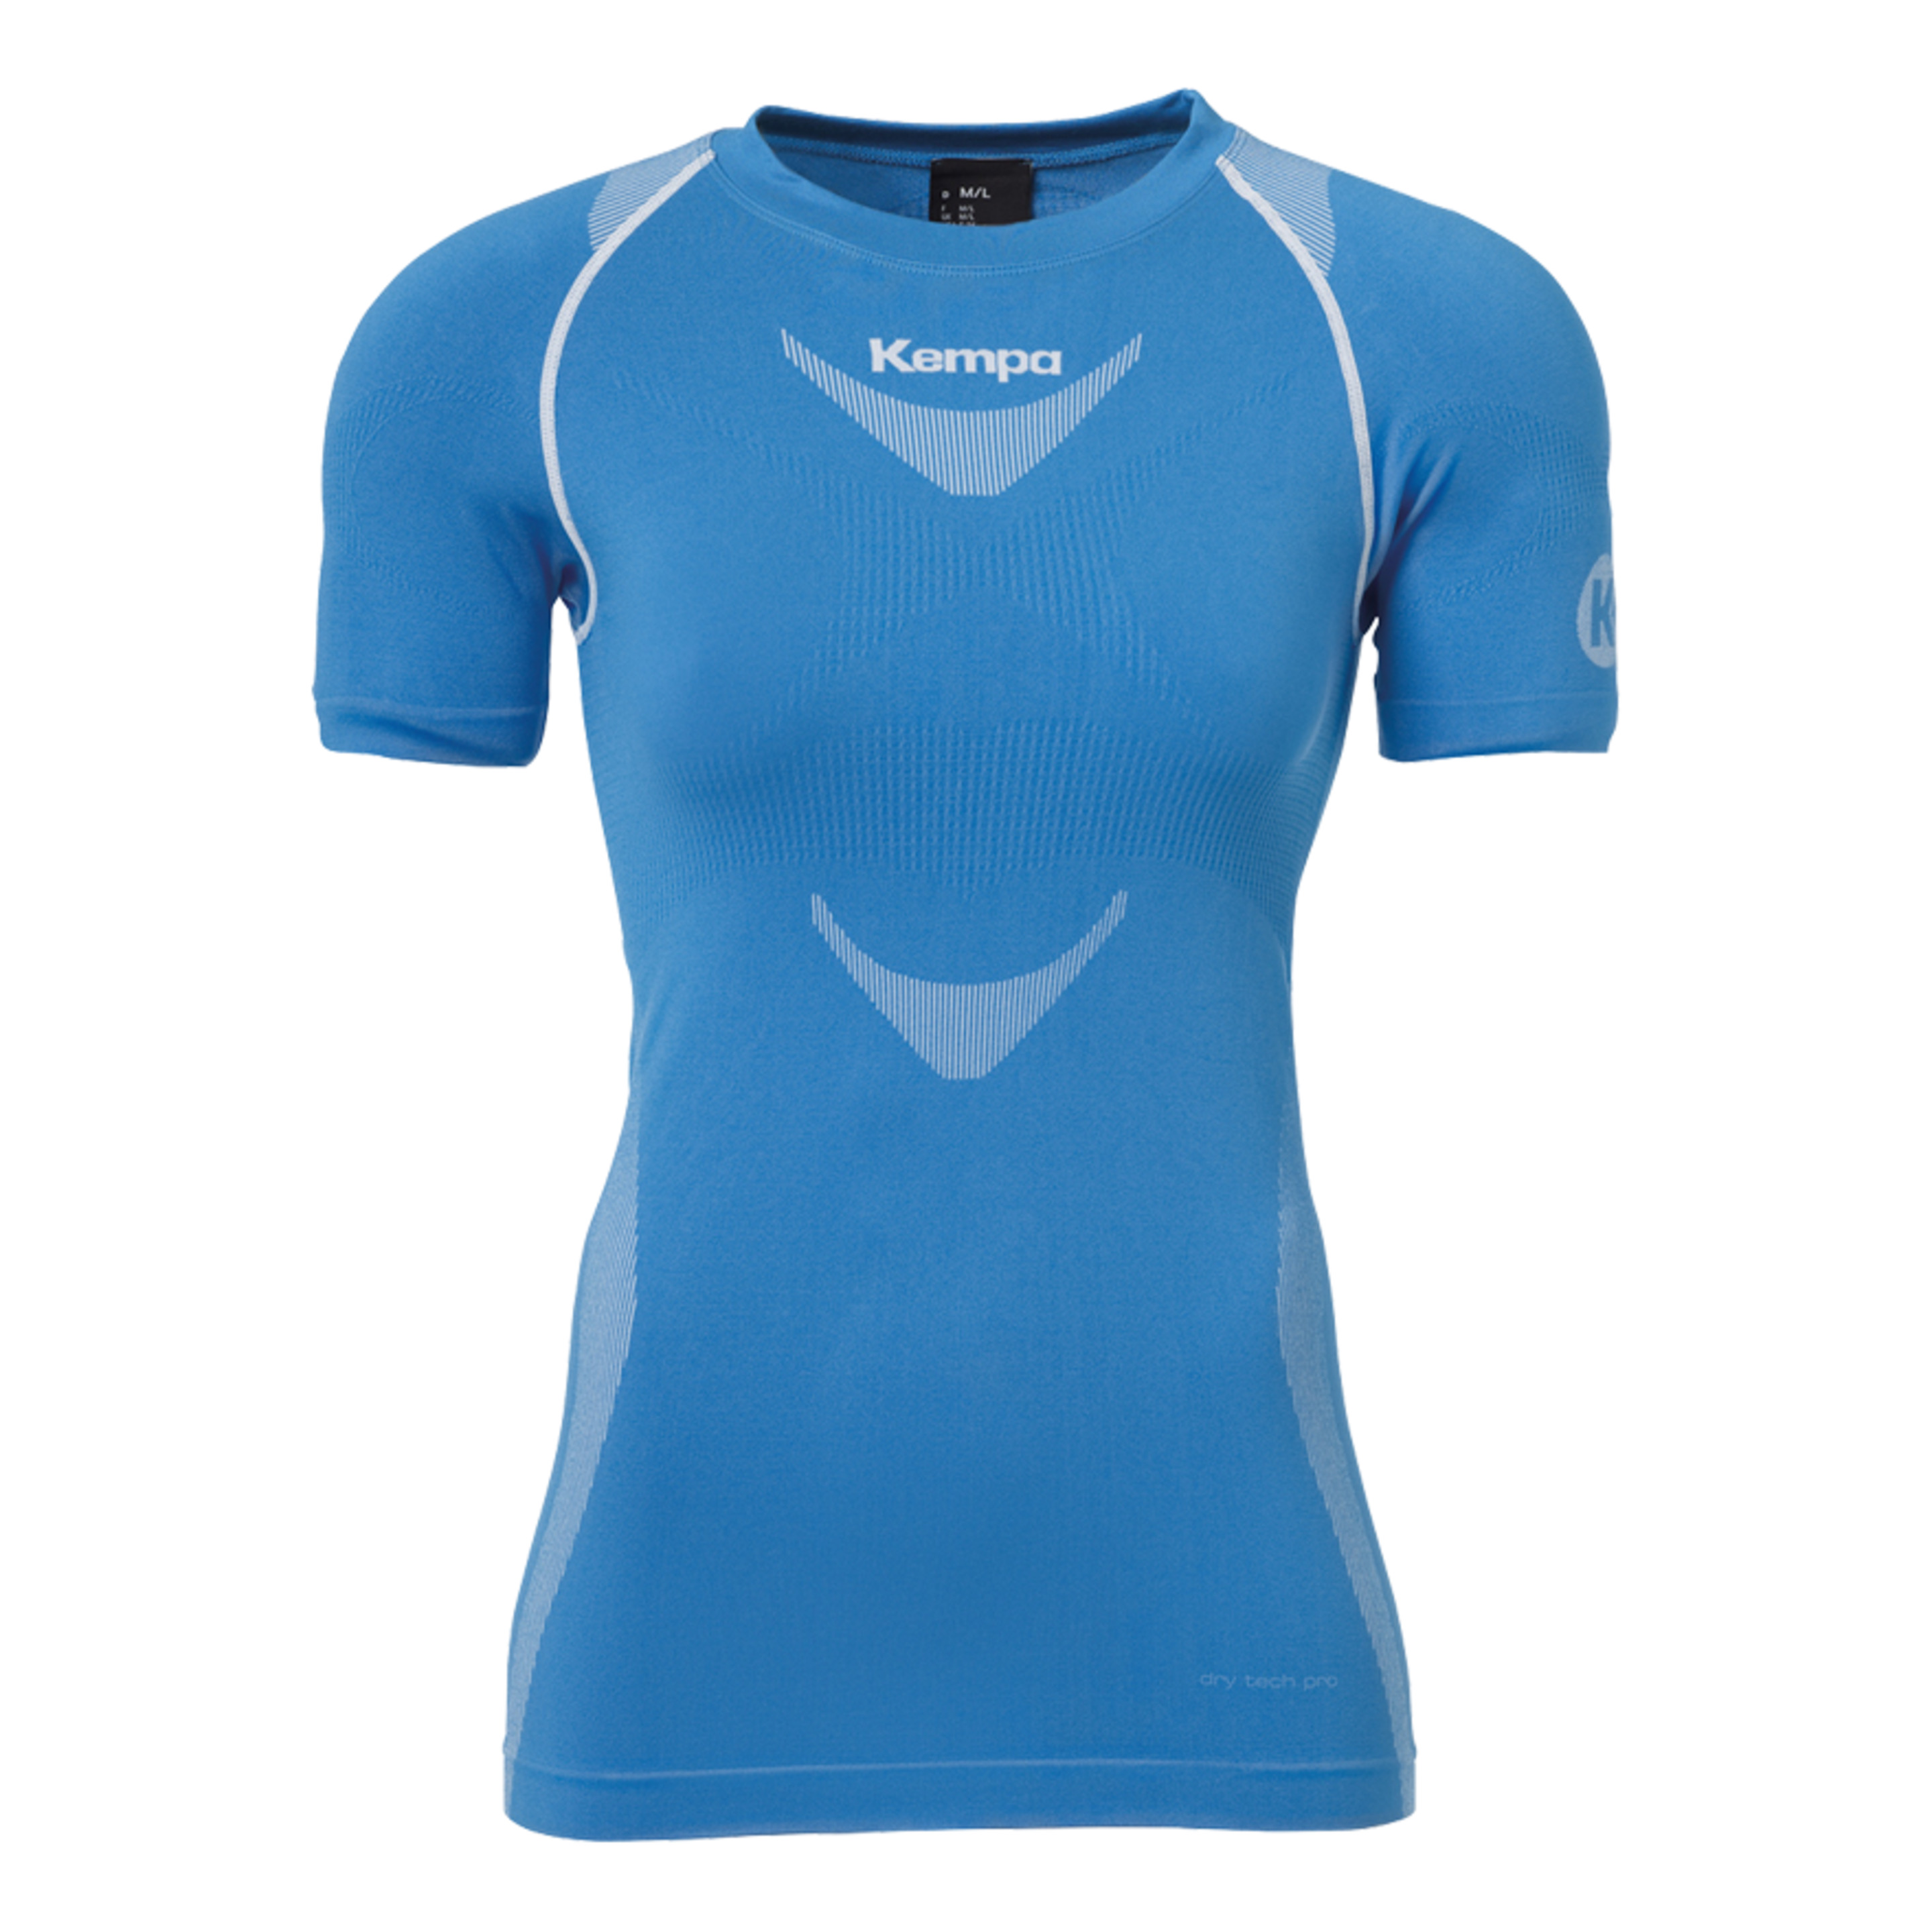 Camiseta Kempa Attitude Pro - azul - 